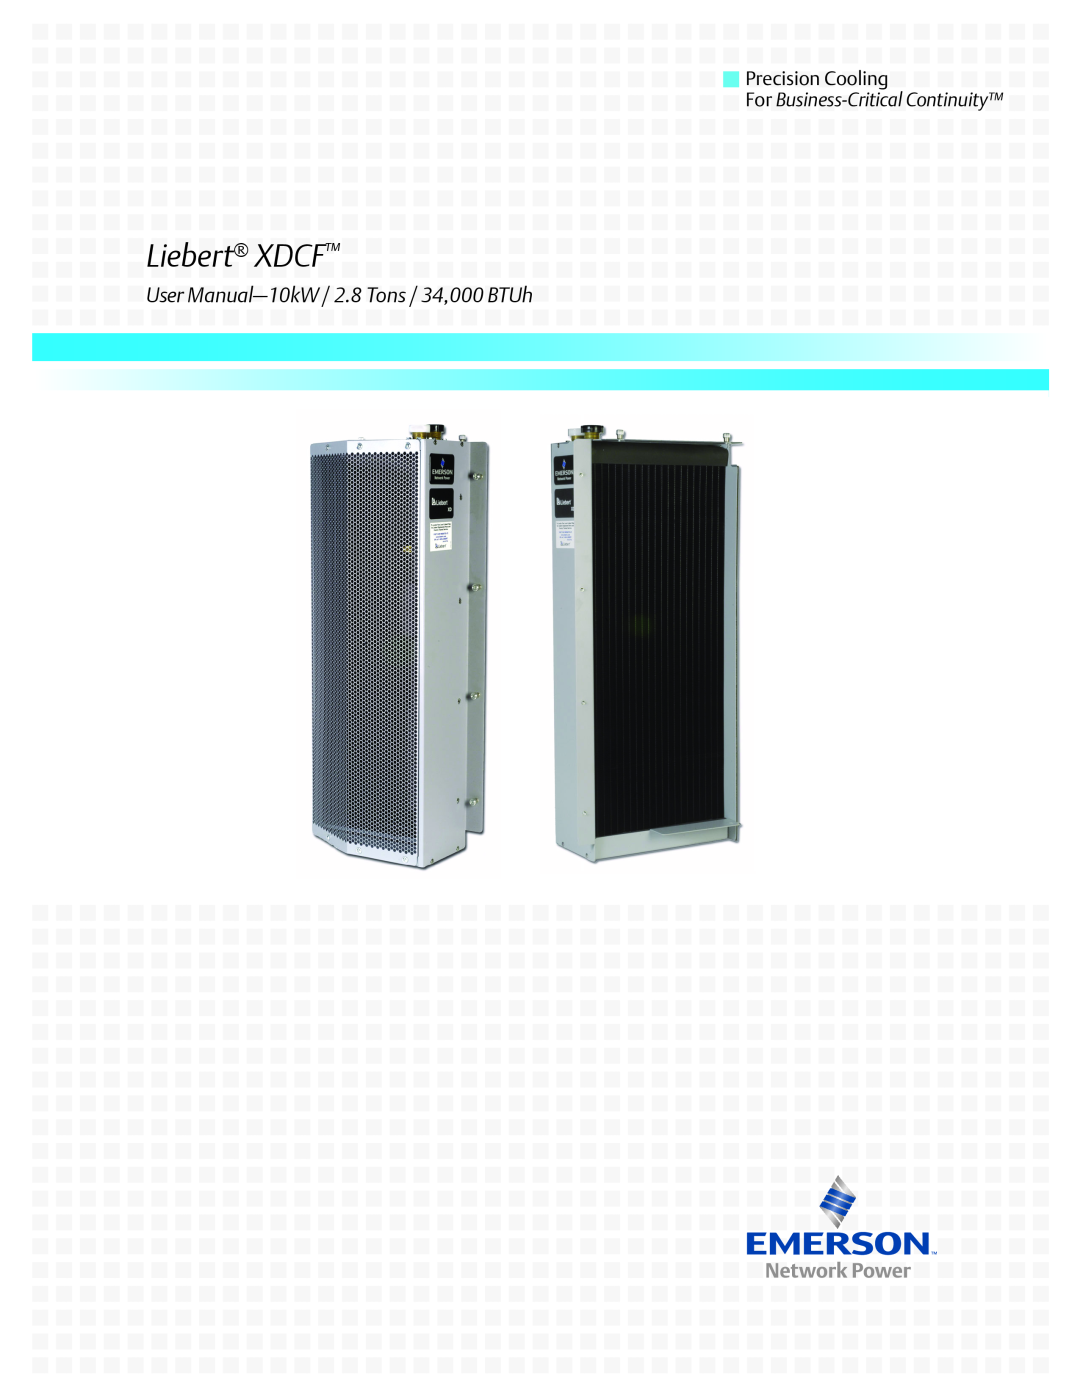 Emerson user manual Liebert XDCF, User Manual-10kW / 2.8 Tons / 34,000 BTUh, Precision Cooling 